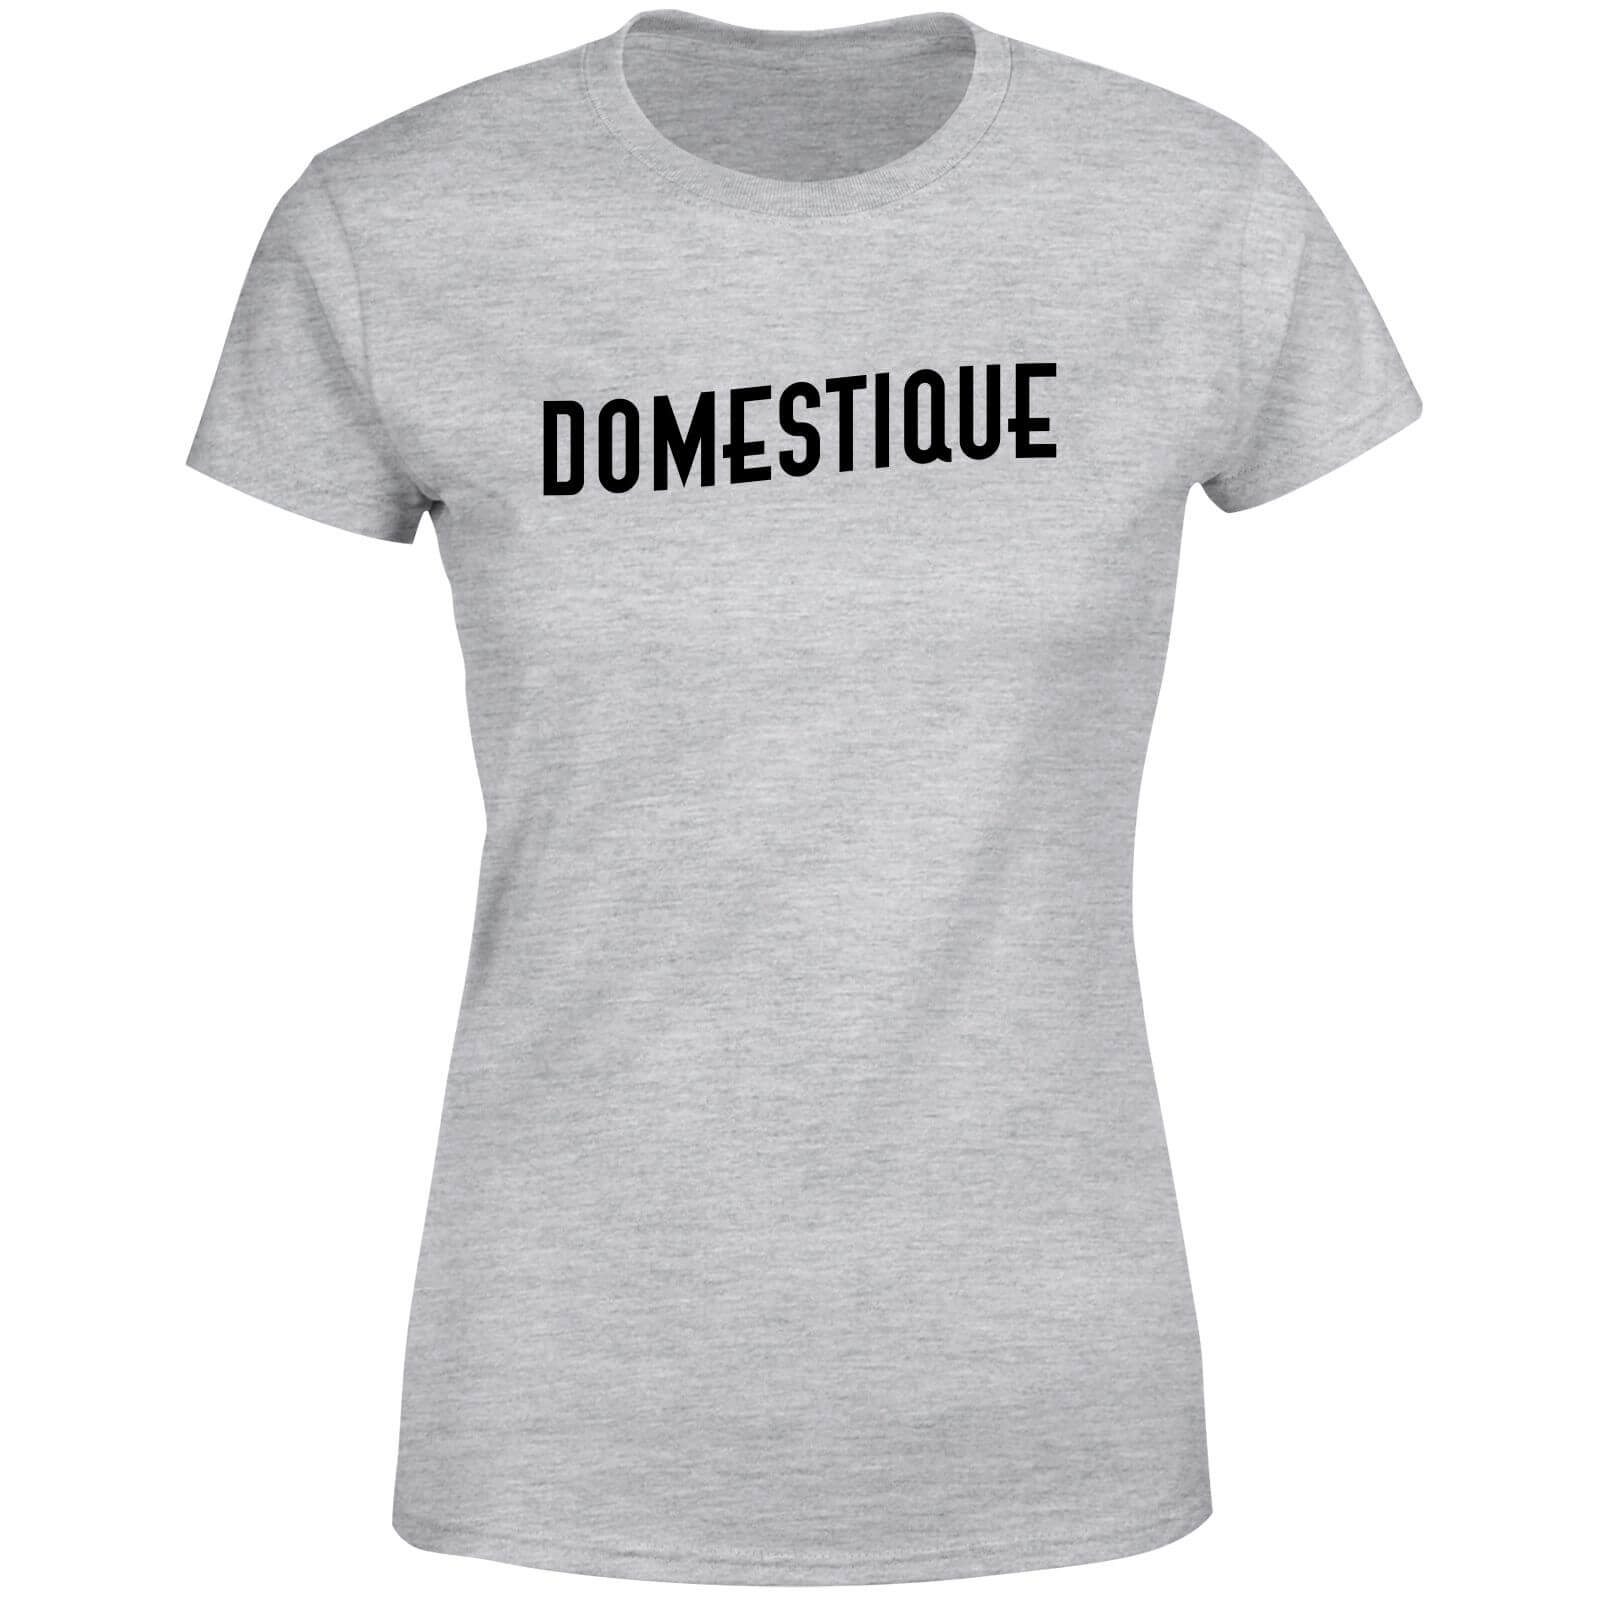 Domestique Women's T-Shirt - Grey - XS - Grey